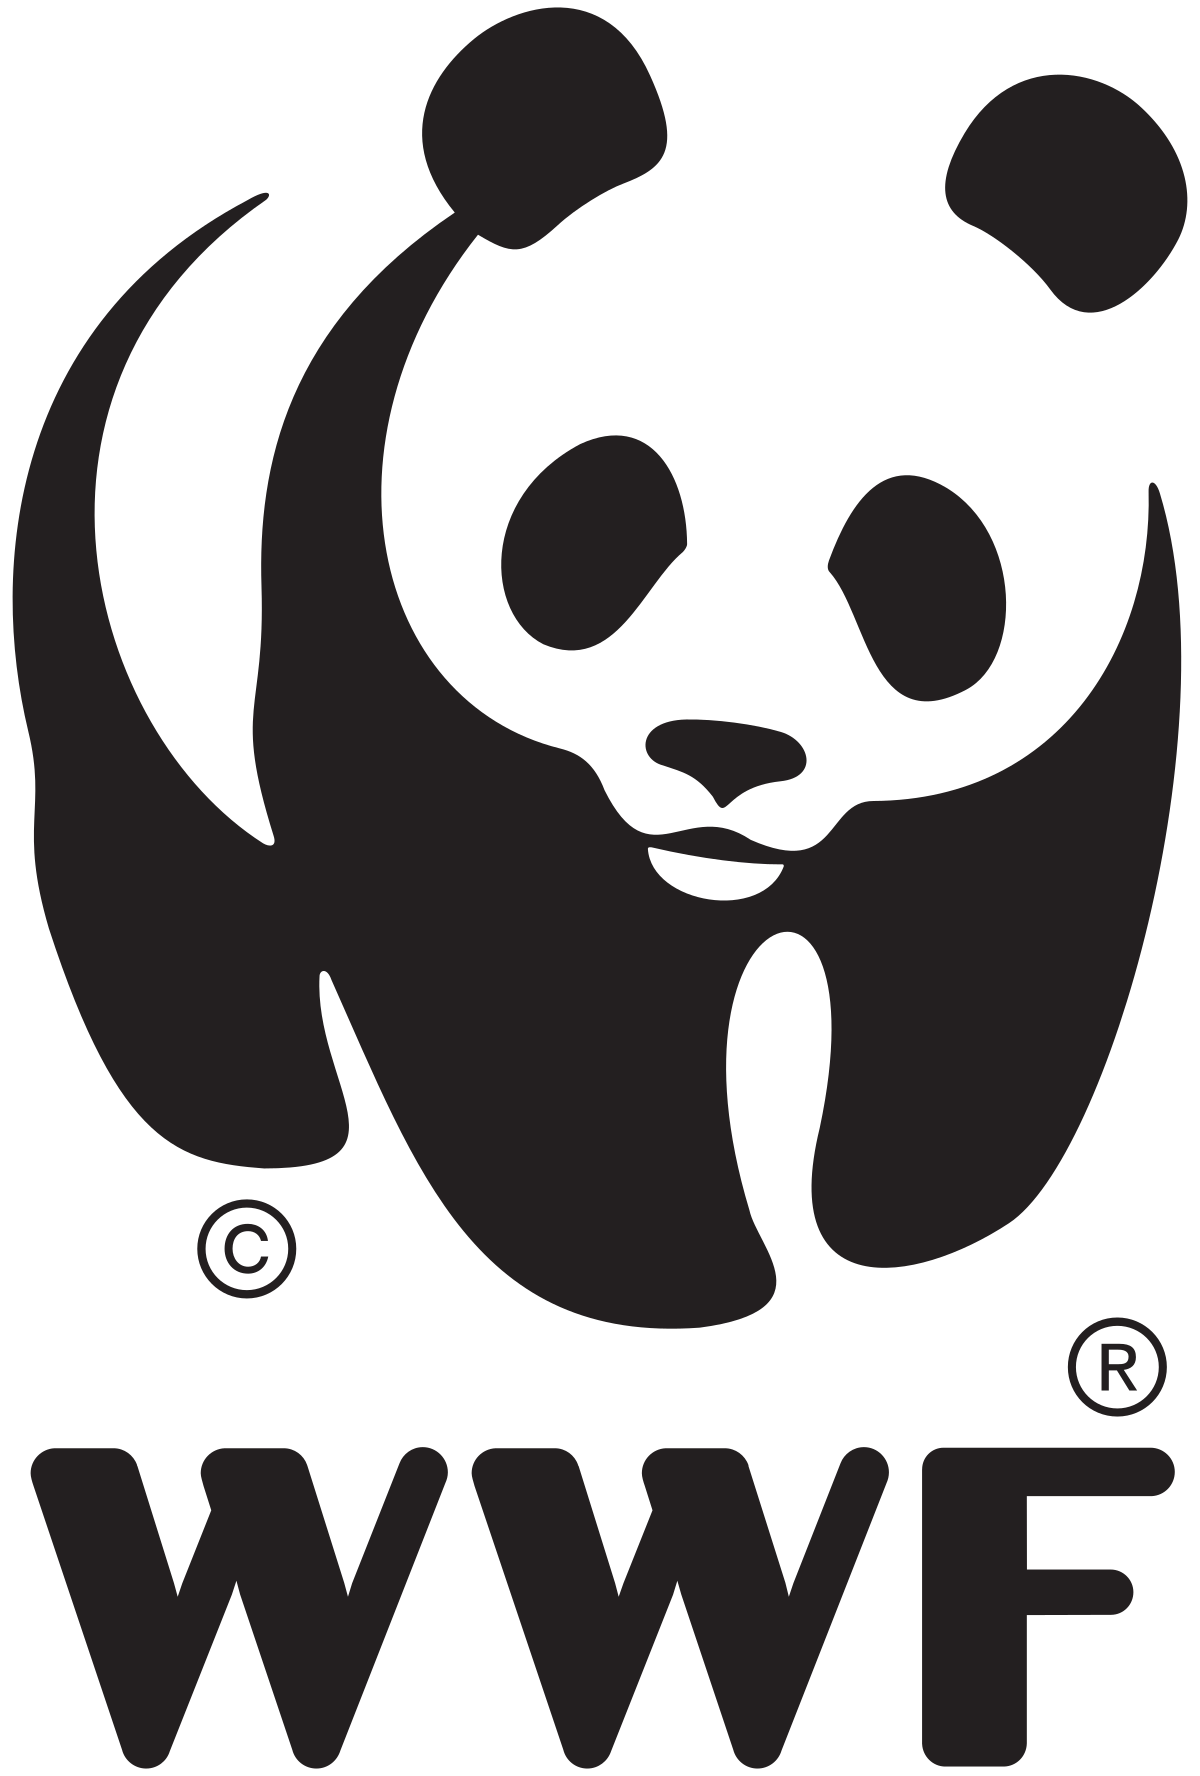 1200px-WWF_Logo.png